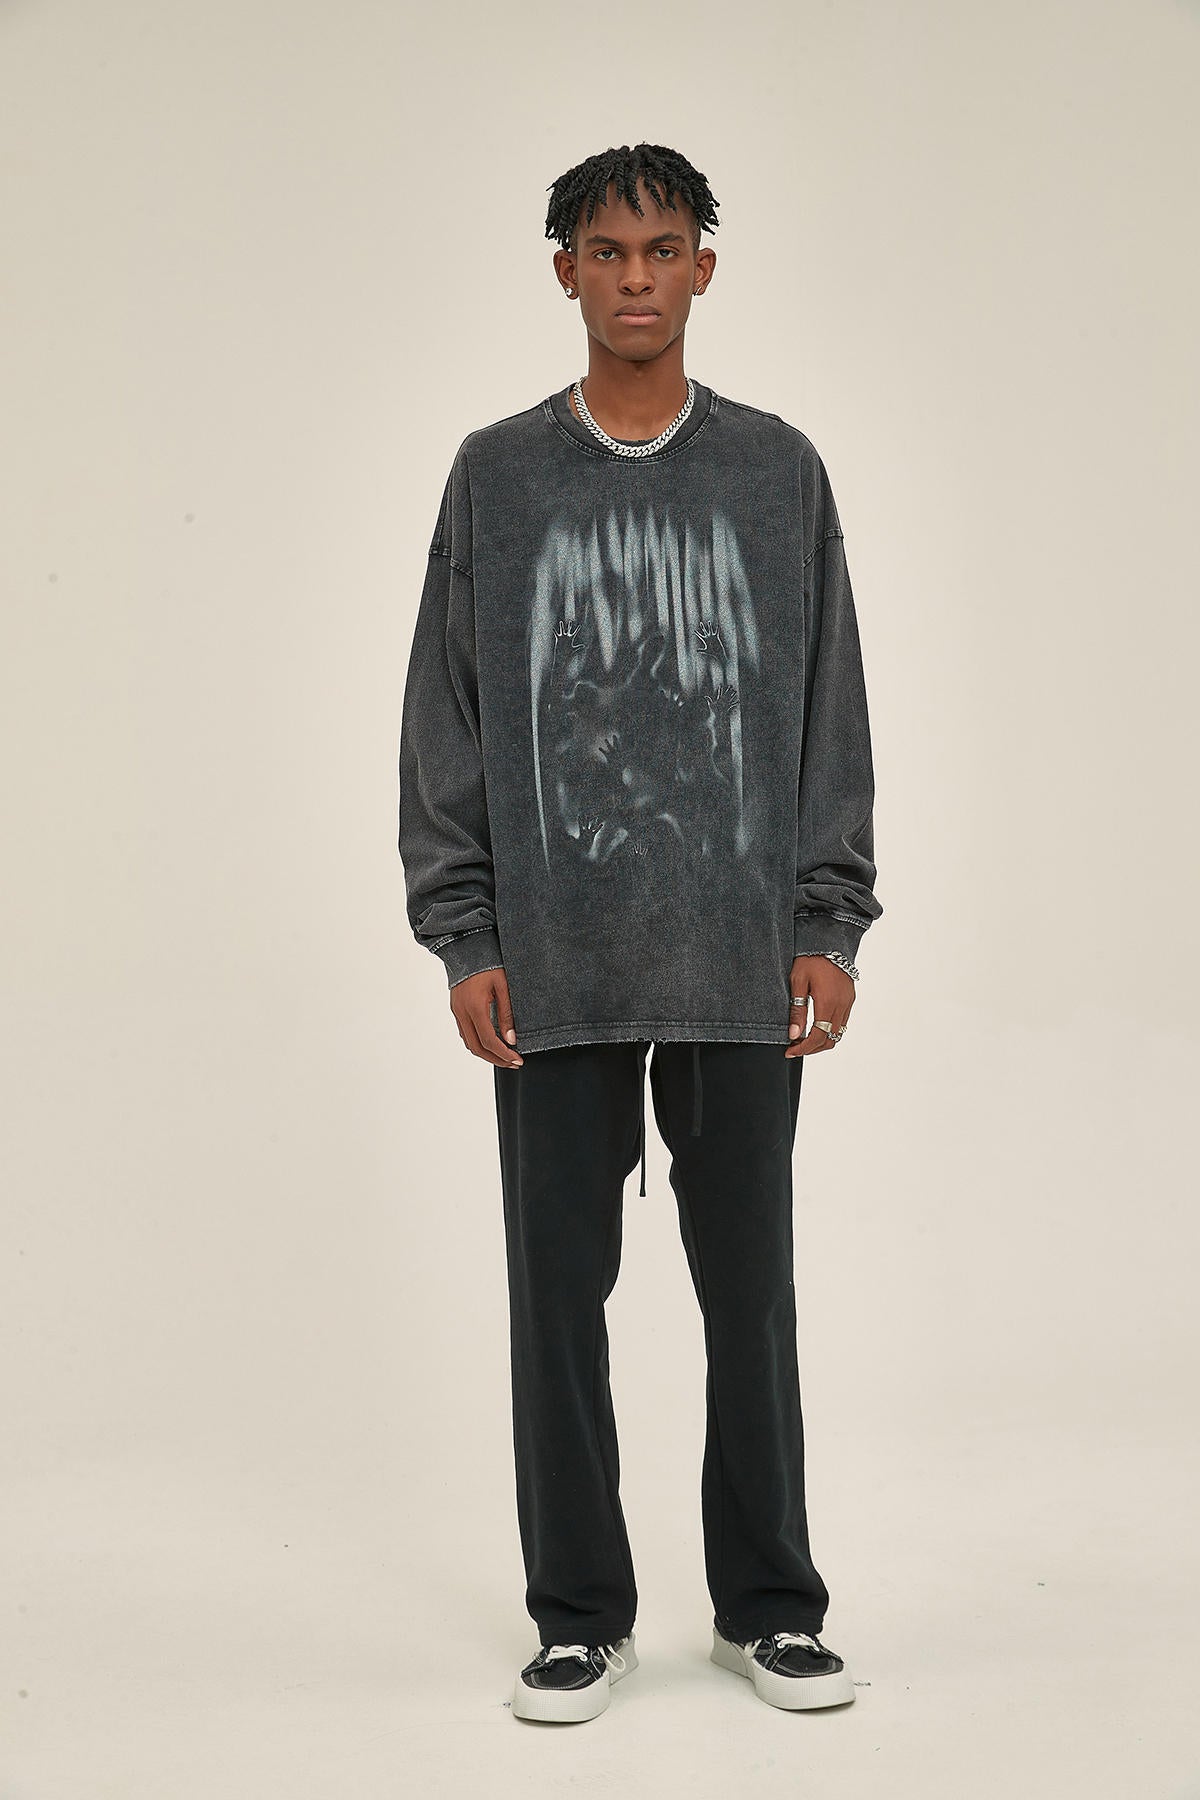 250G Washed Silhouette Print Men Long-Sleeved Sweatshirt